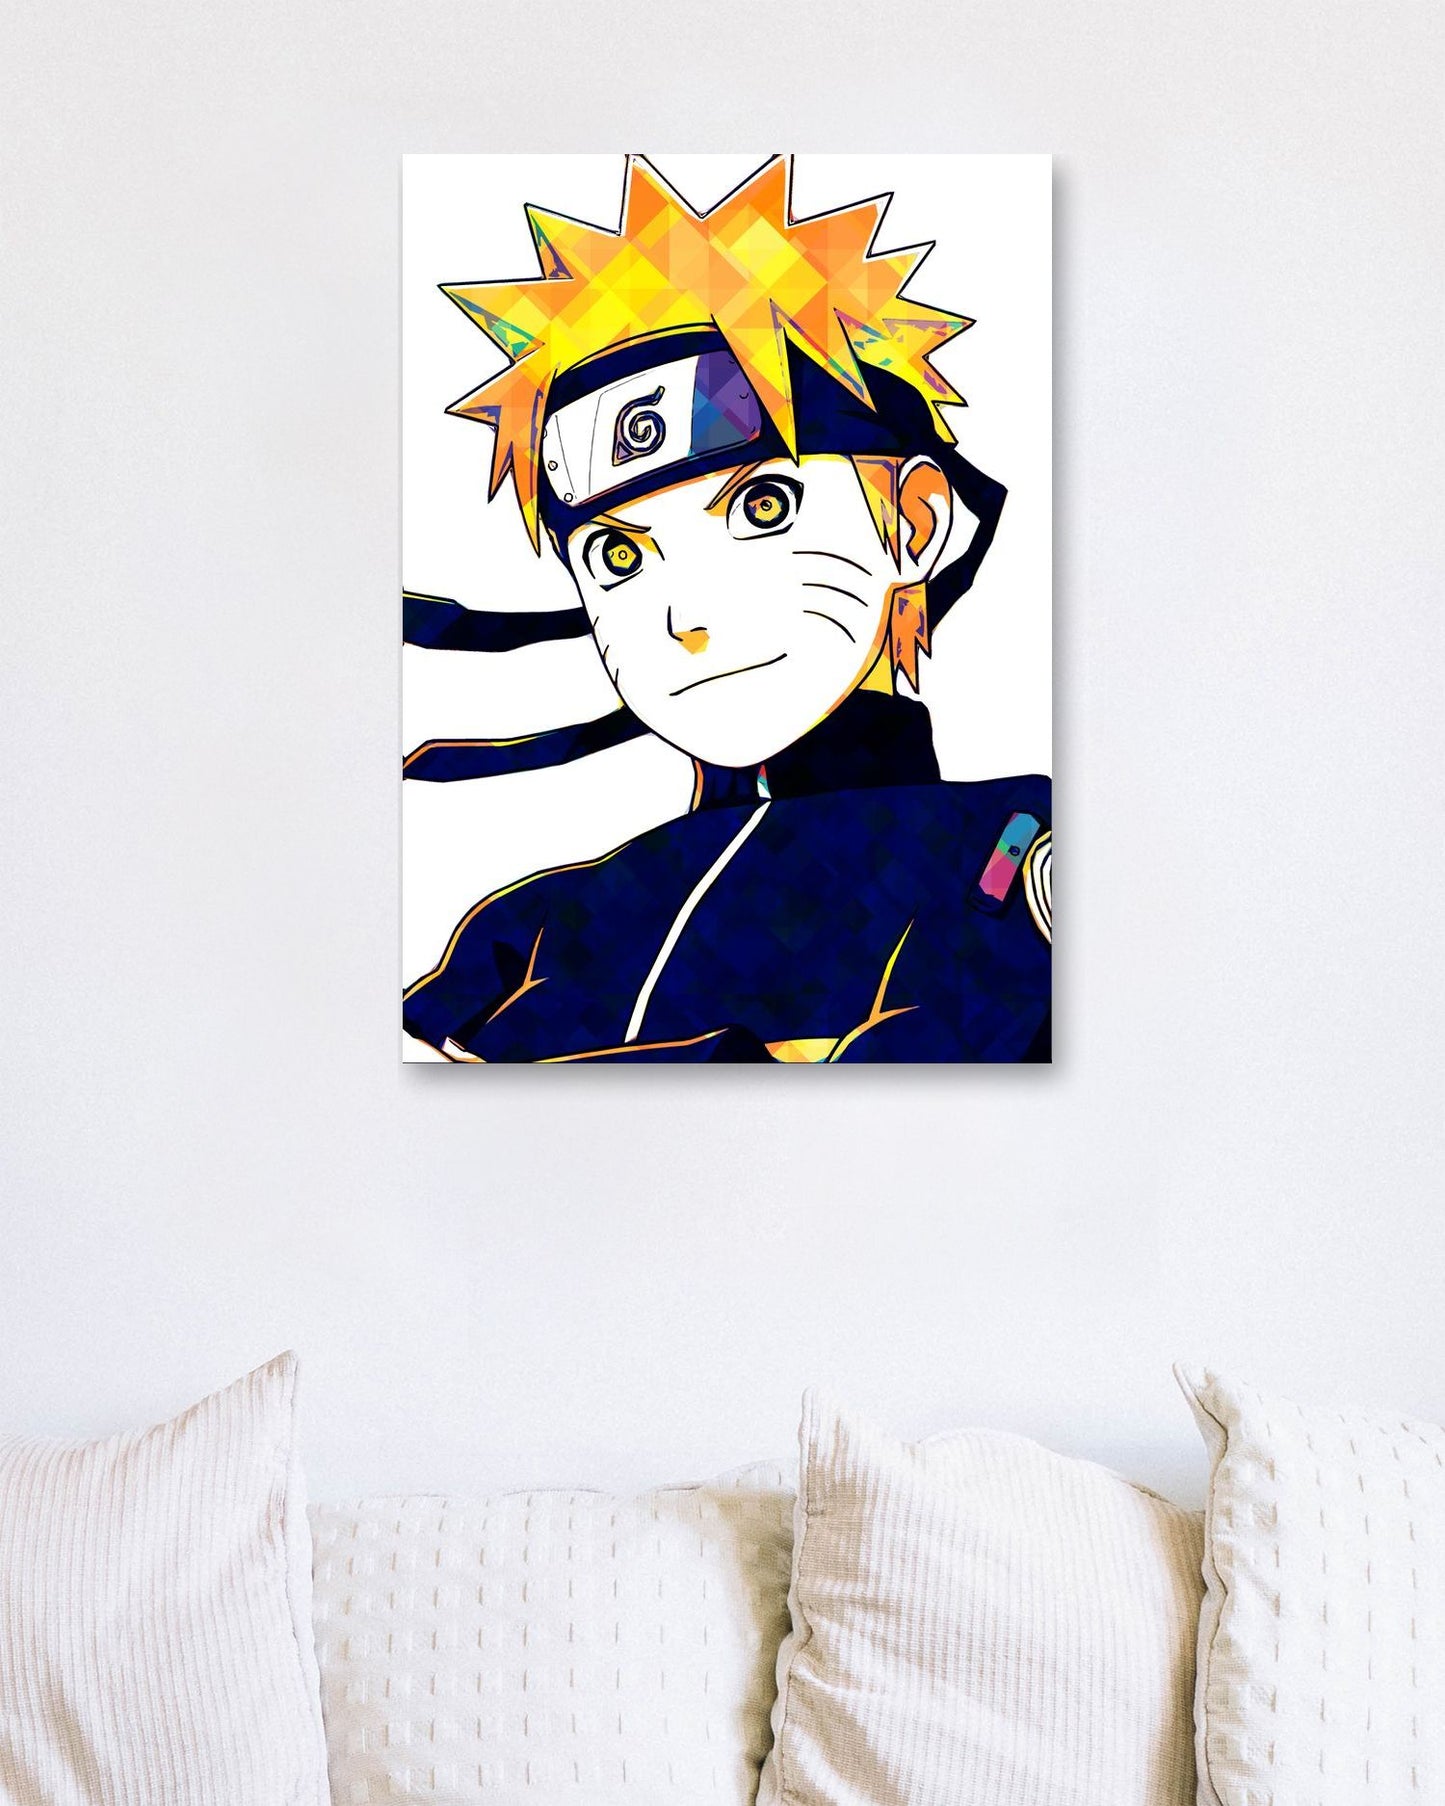 Naruto shipudden 4 - @ColorfulArt